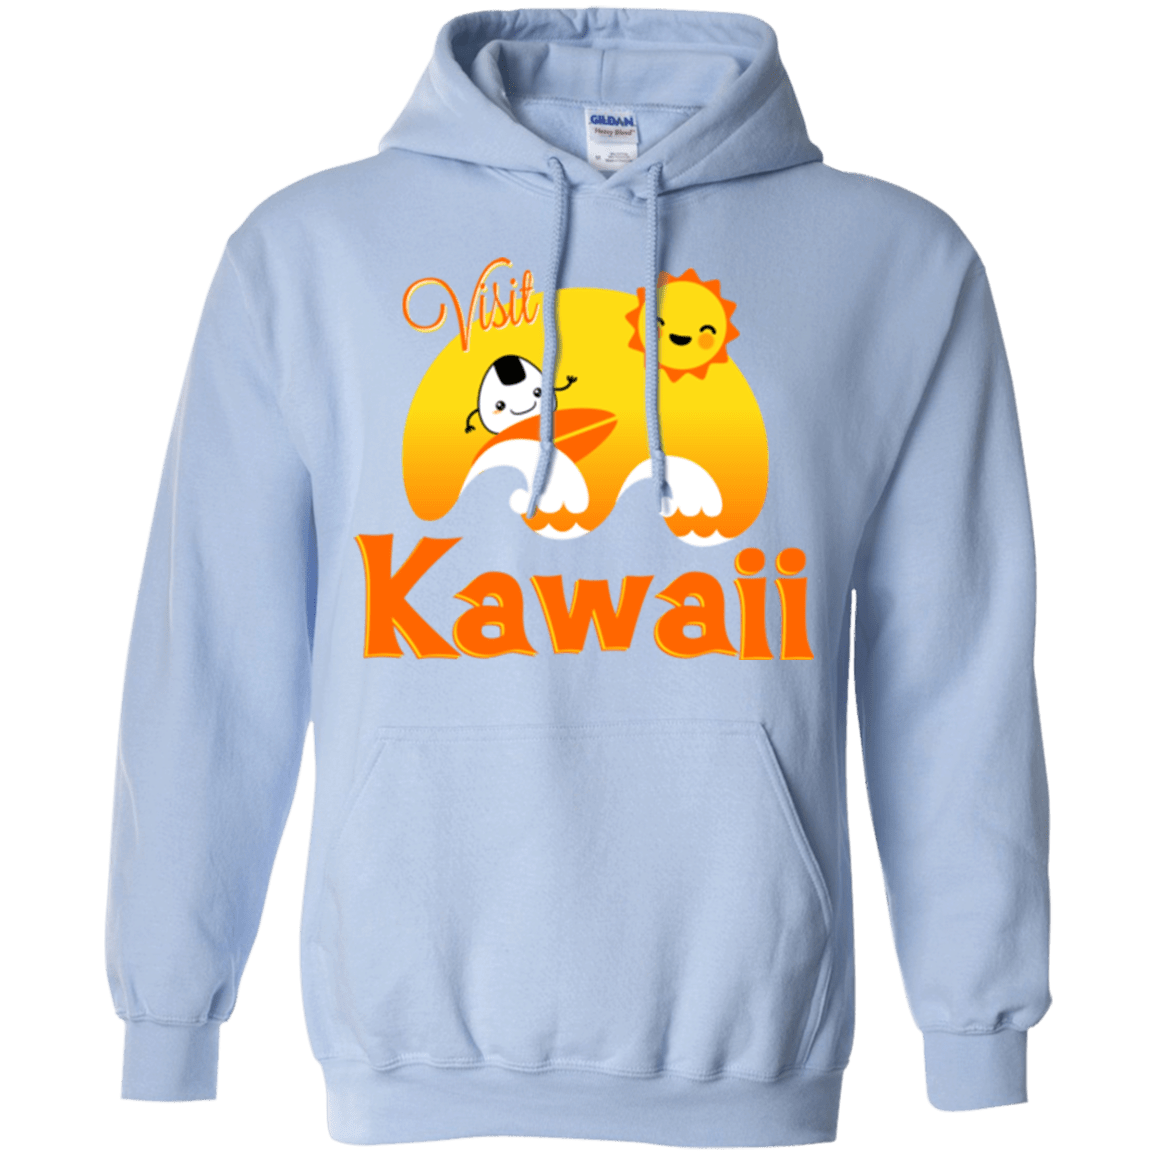 Sweatshirts Light Blue / Small Visit Kawaii Pullover Hoodie